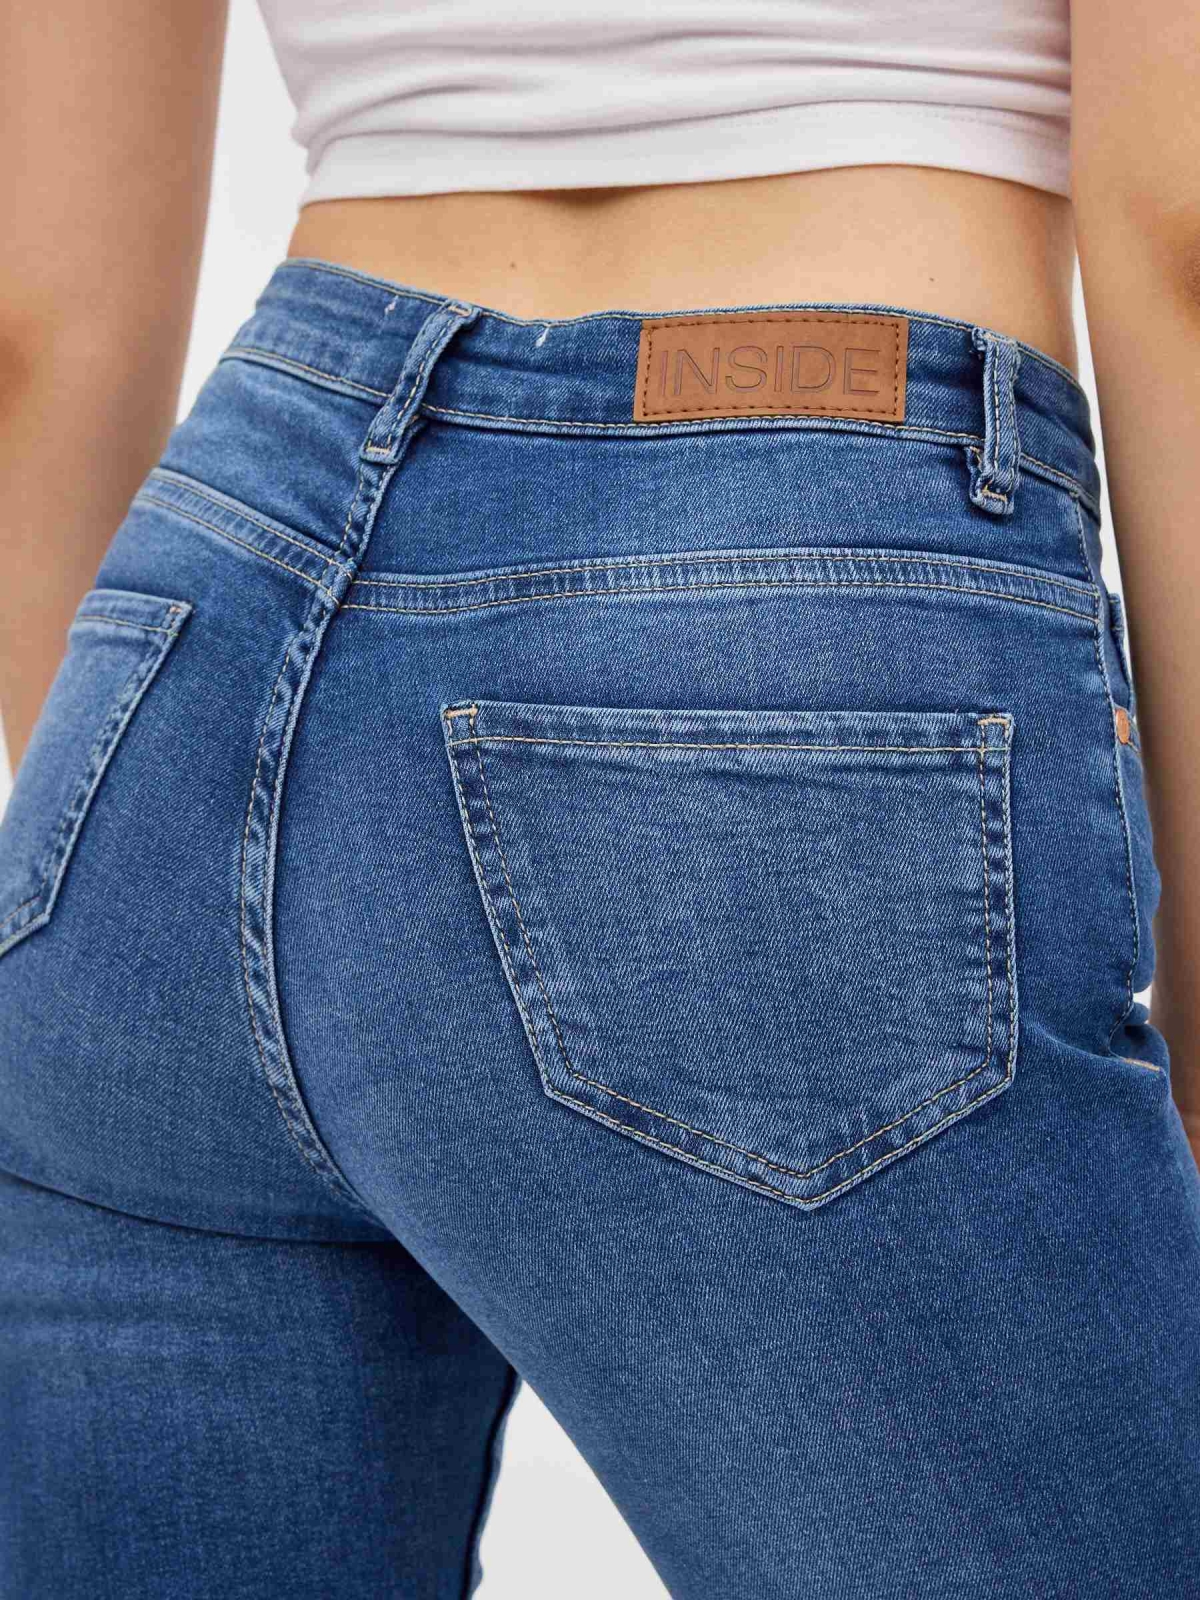 Denim skinny jeans medium rise blue detail view